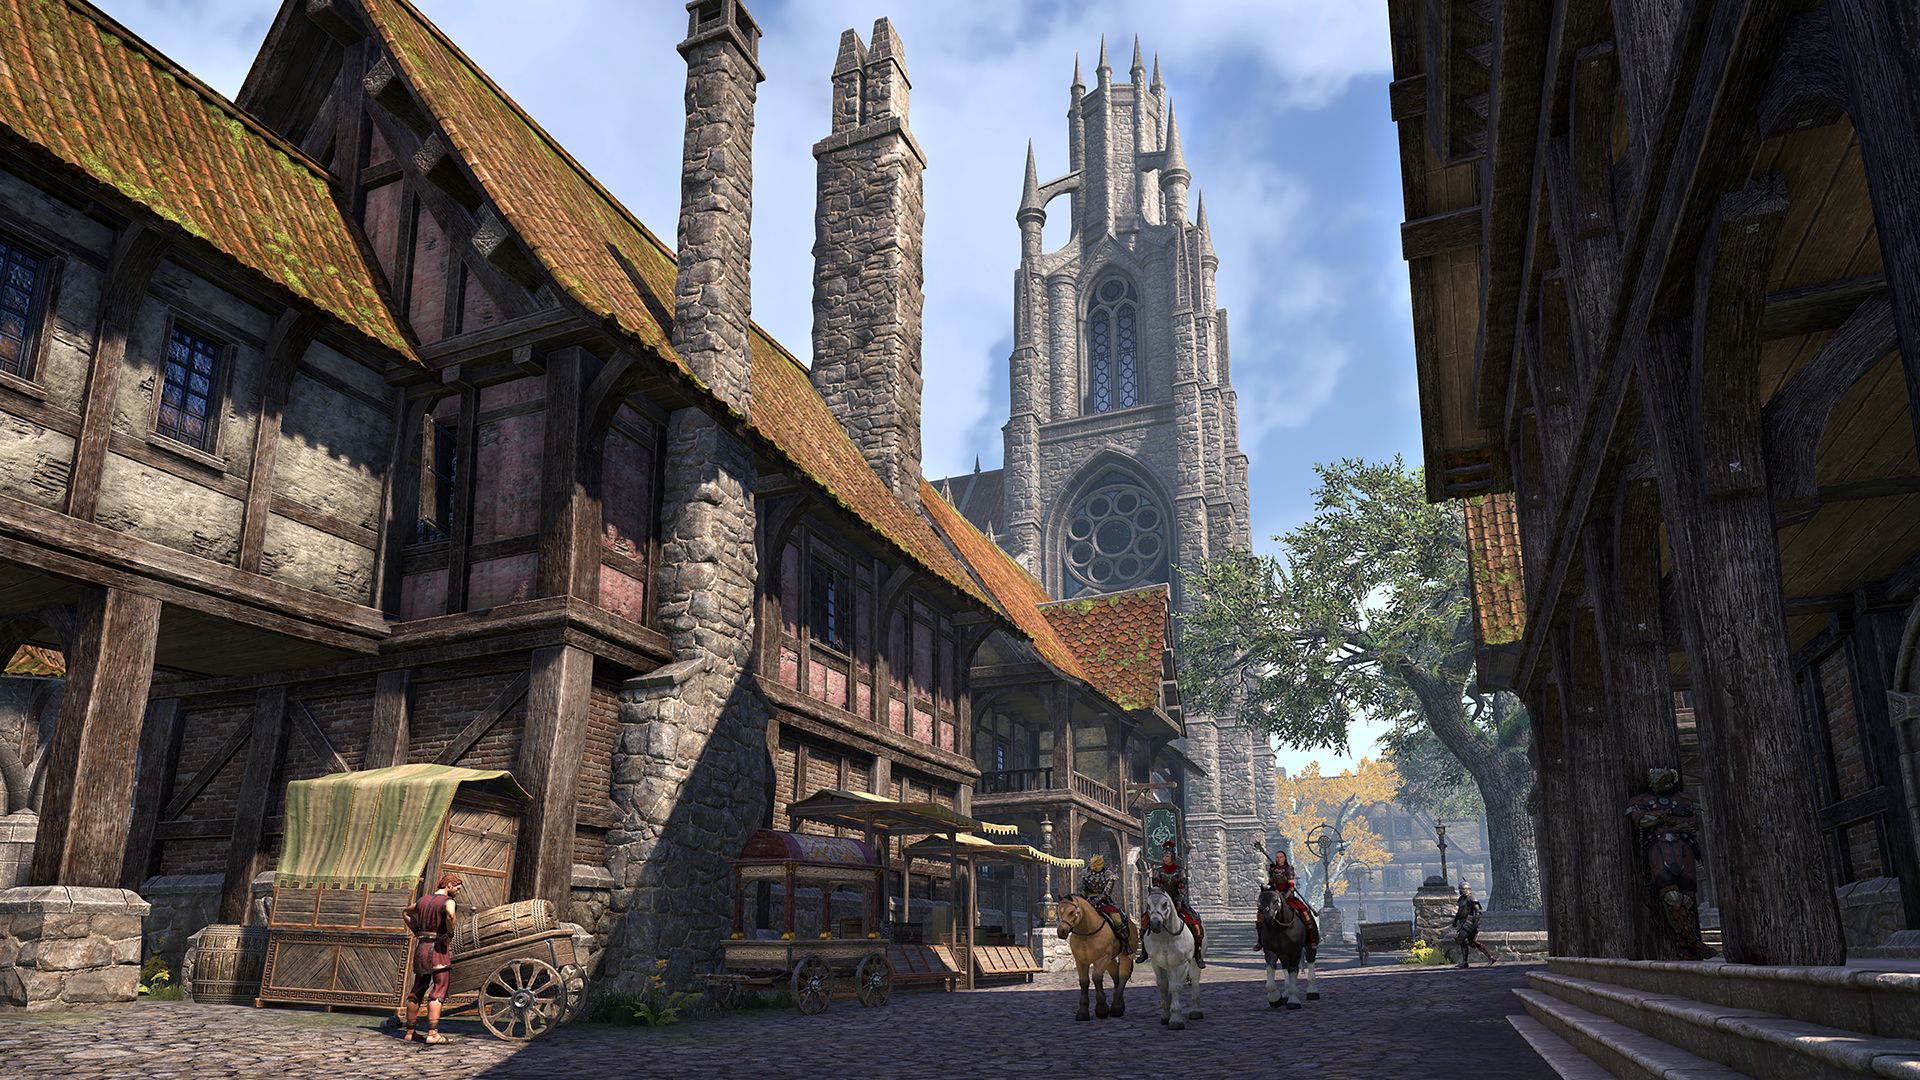 The Elder Scrolls Online - Devs Shared Update 34 Preview